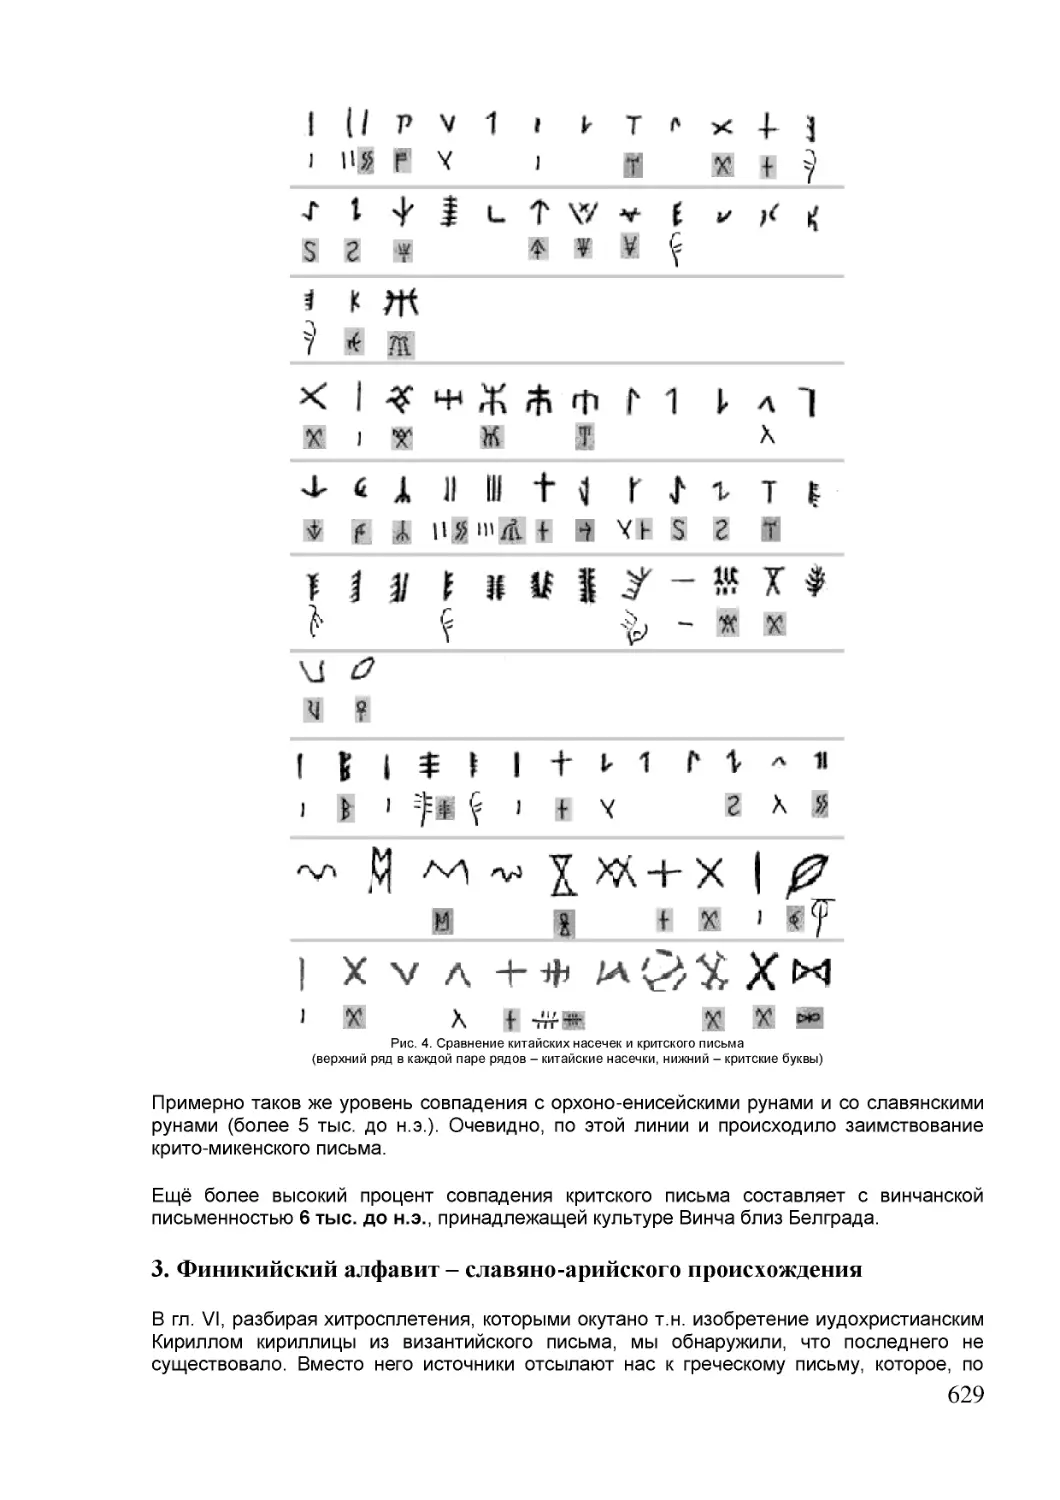 ﻿3. Финикийский алфавит – славяно-арийского происхождени